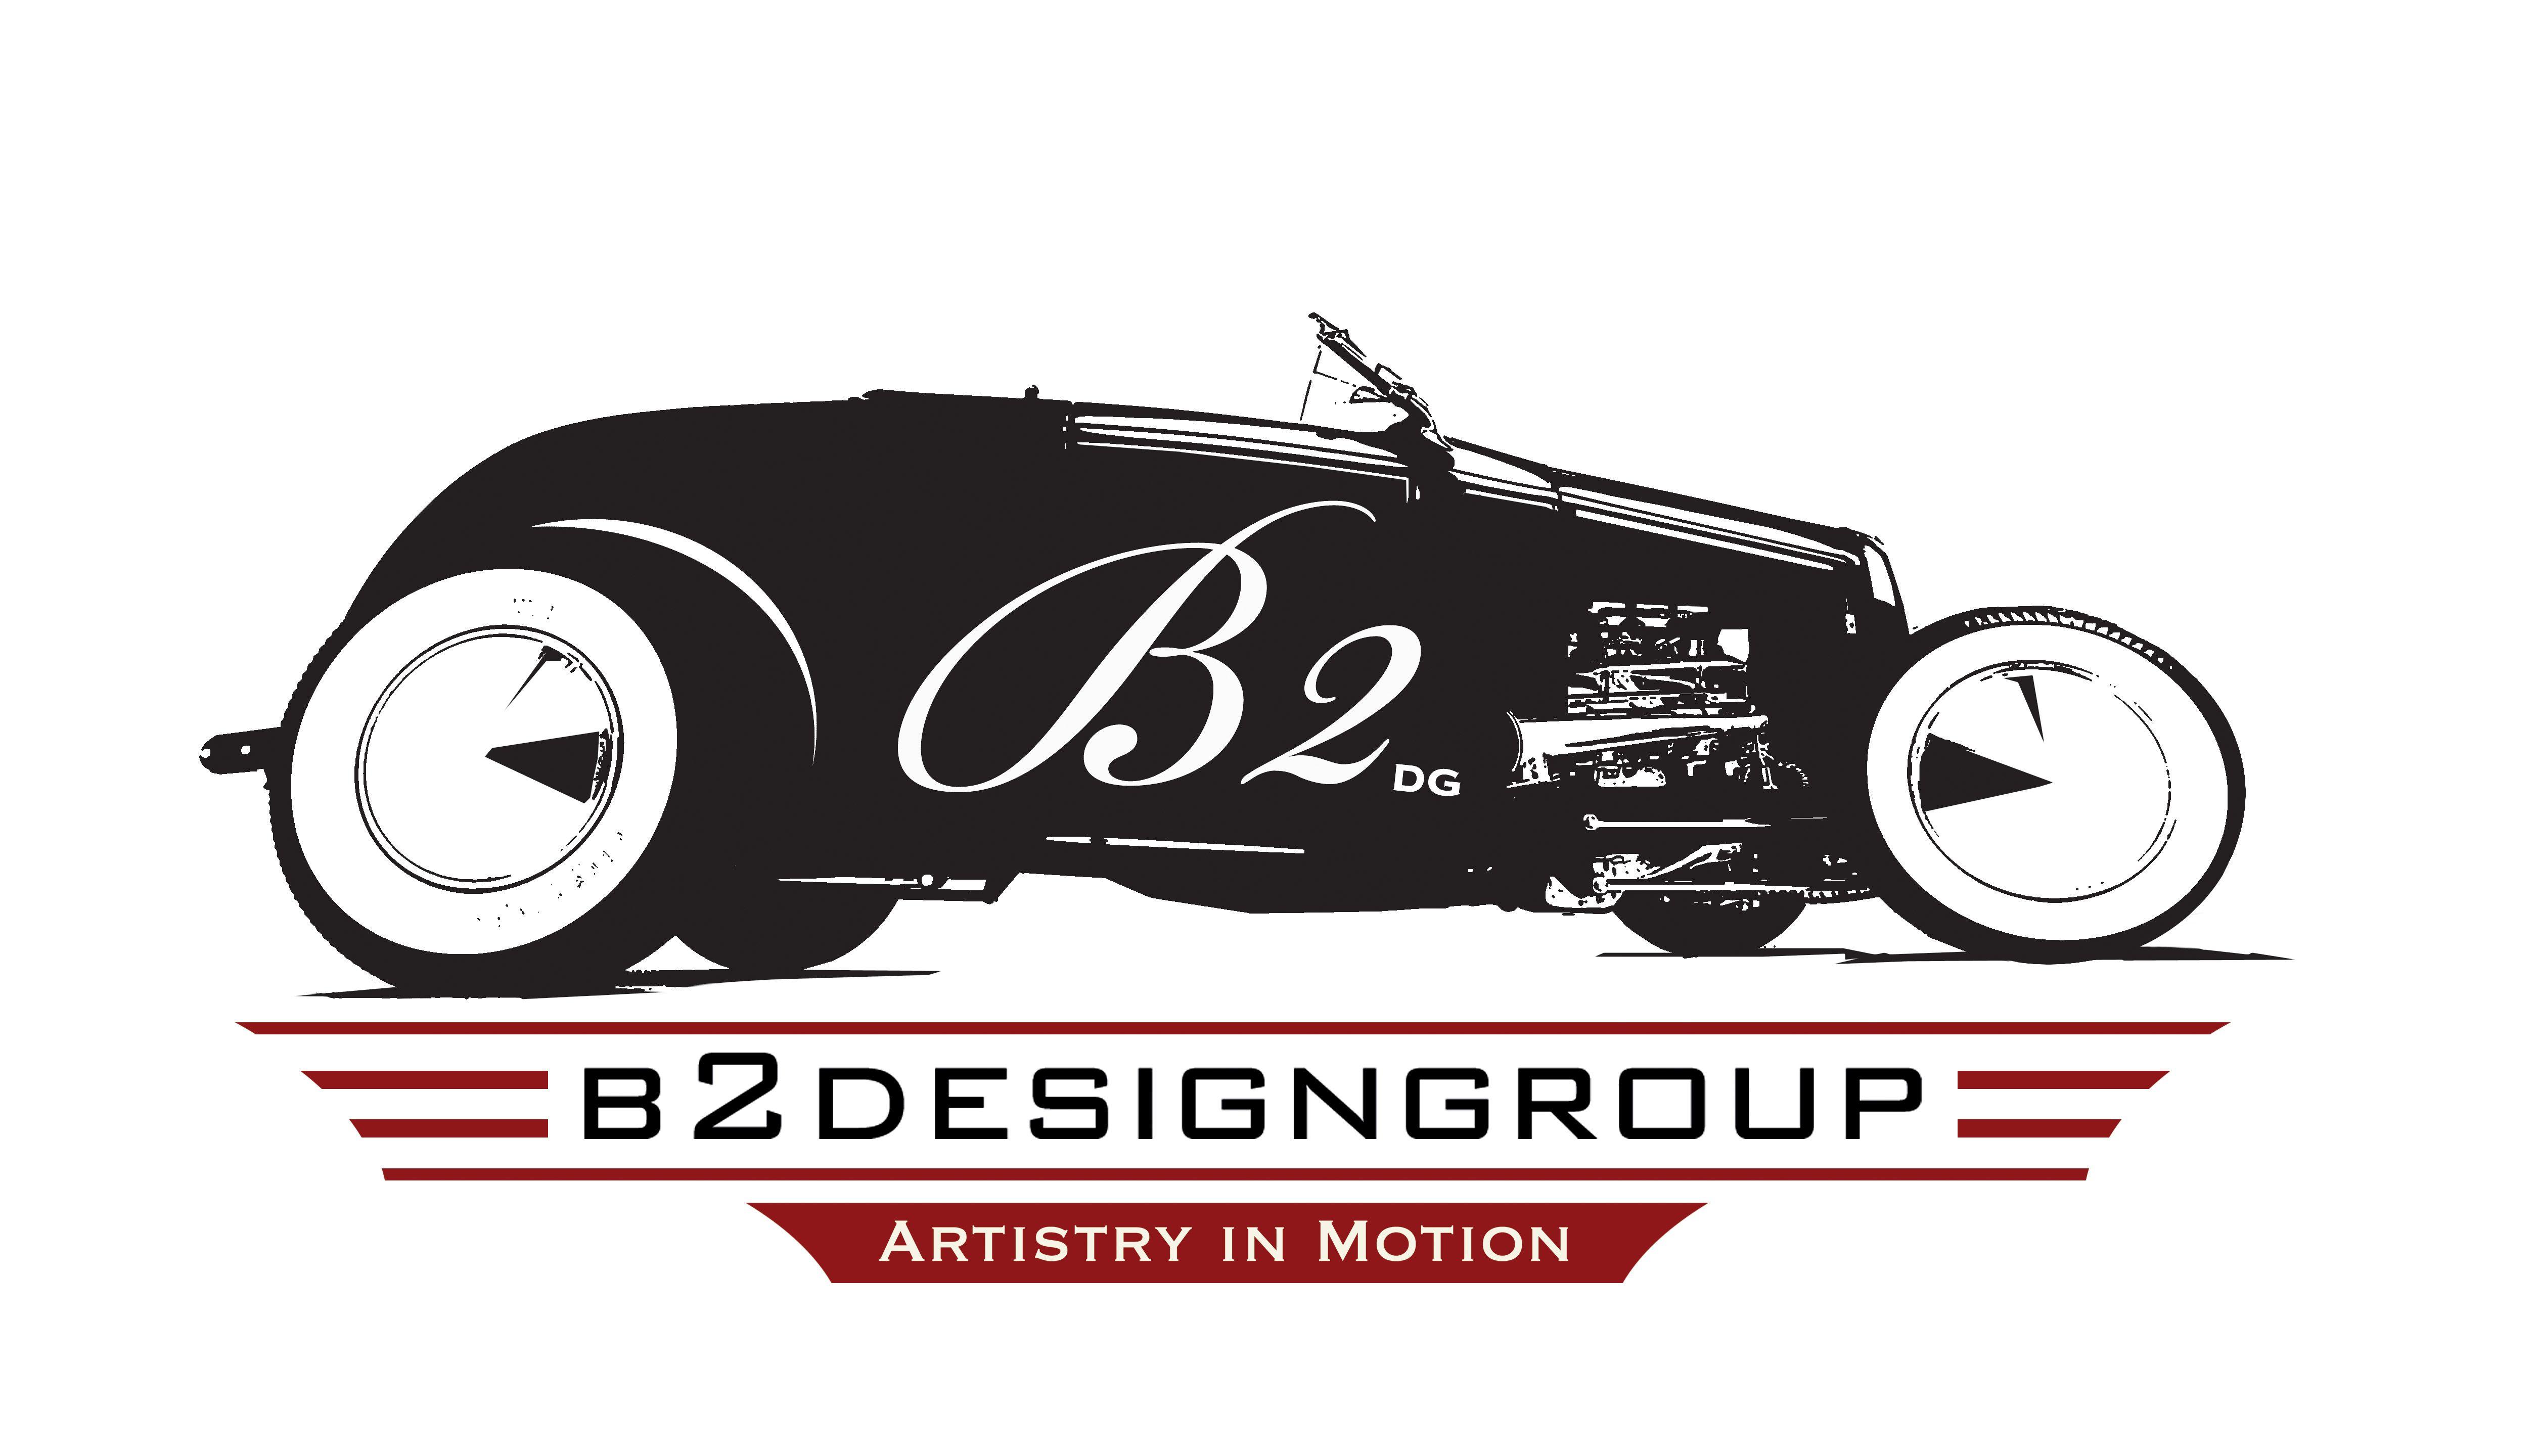 Old School Mechanic Shop Logo - B2 Design Group logo | Rod Shop Logos | Pinterest | Hot rods, Cars ...